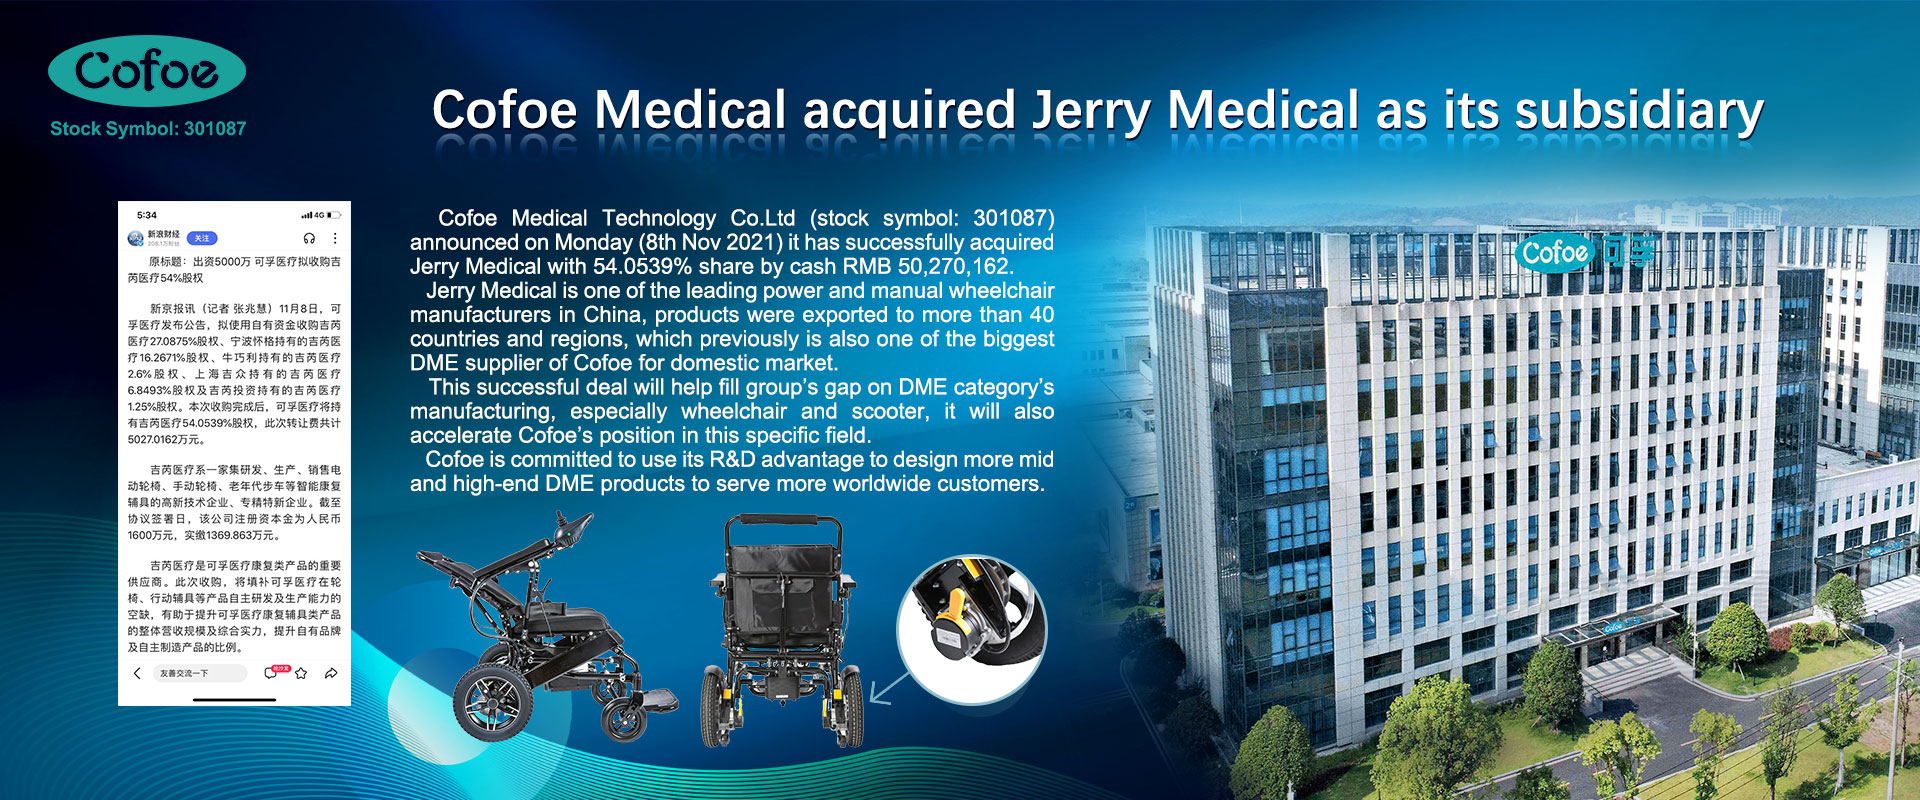 Cofoe Medical Technology Aquired Jerry Medical como su subsidiaria-20211111